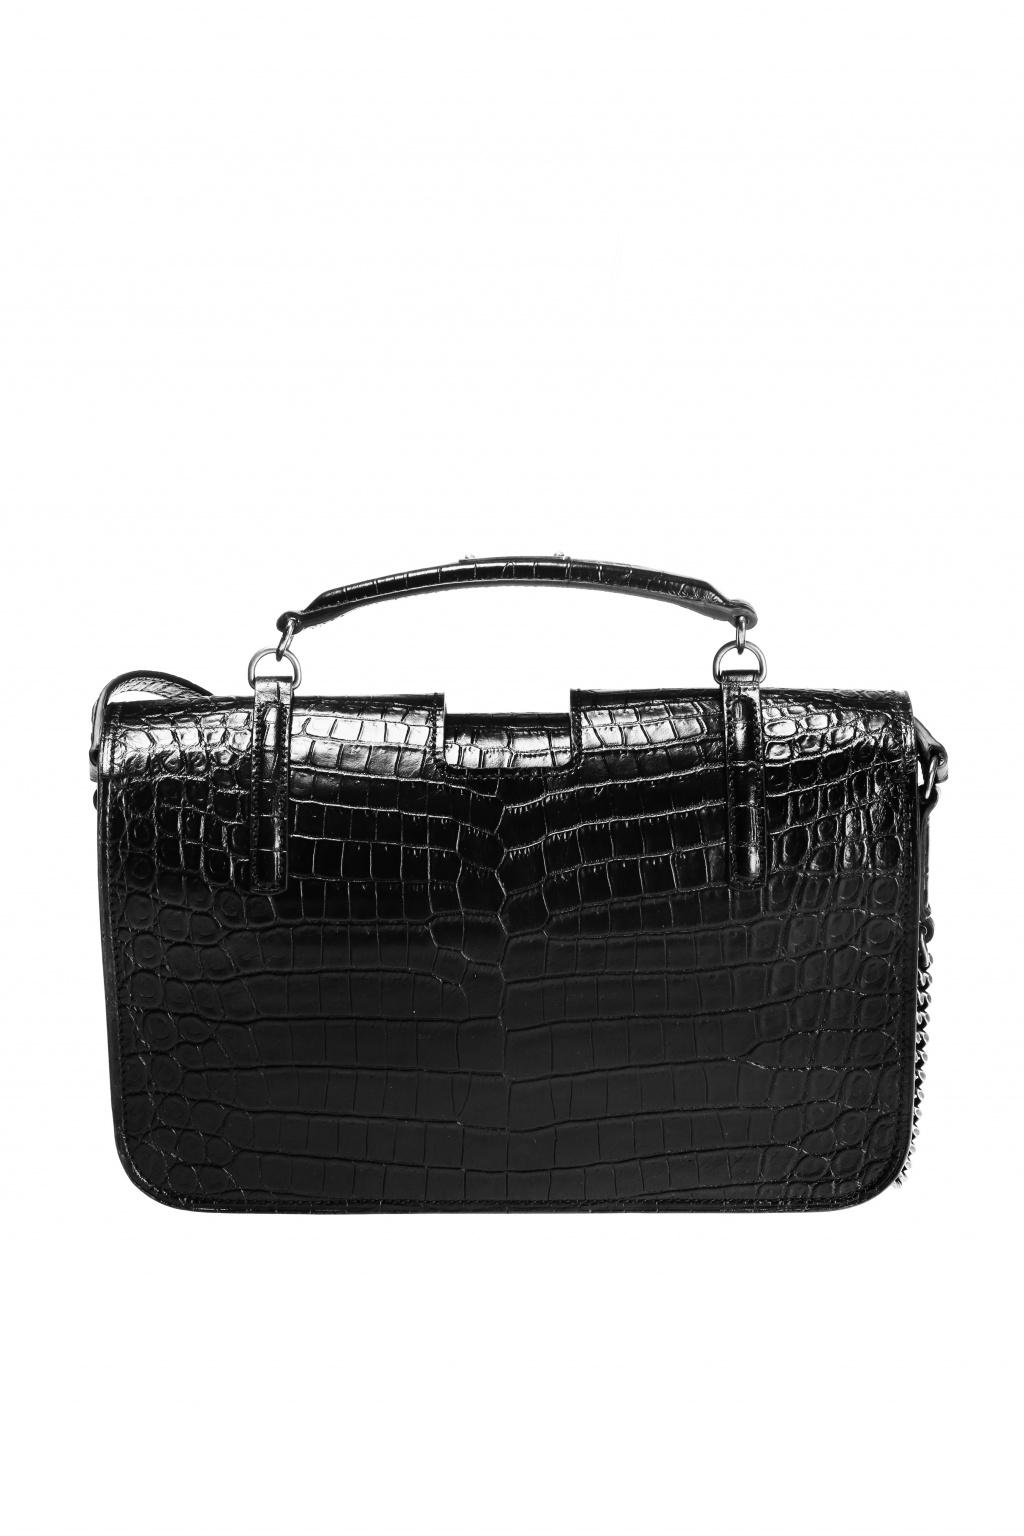 black mock croc handbag